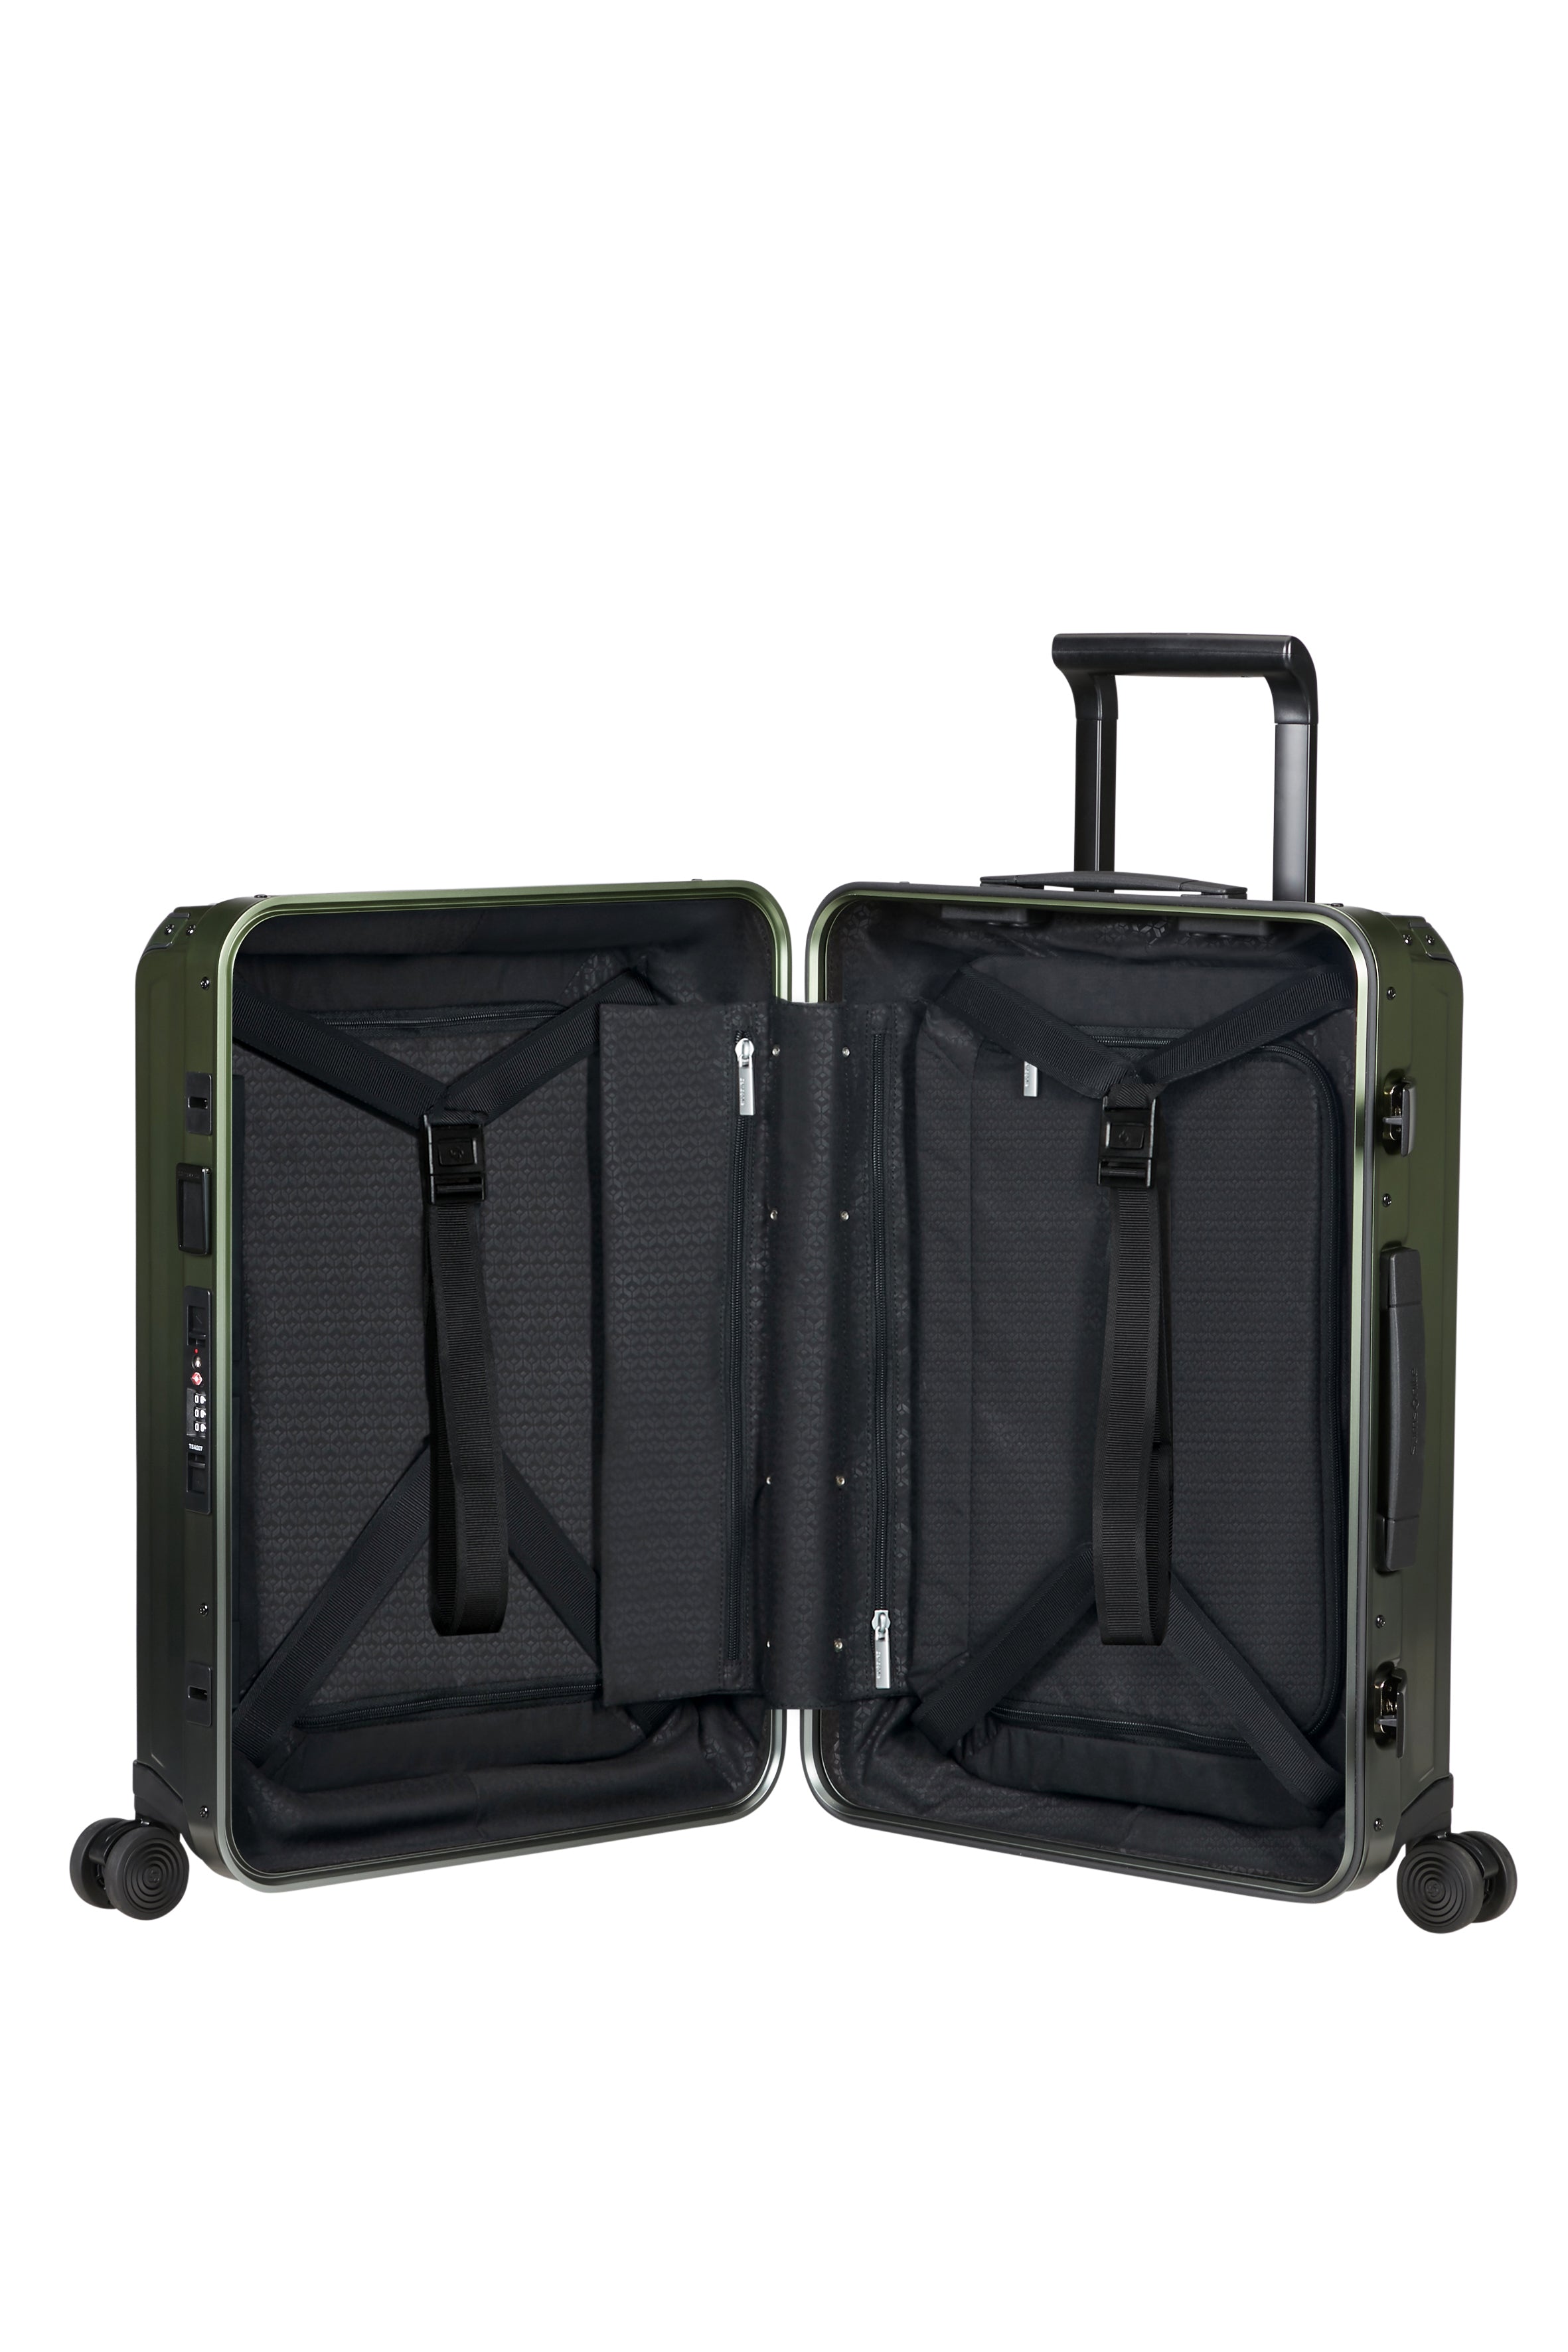 Samsonite - Lite Box ALU 55cm Small 4 Wheel Hard Suitcase - Gradient Green-2